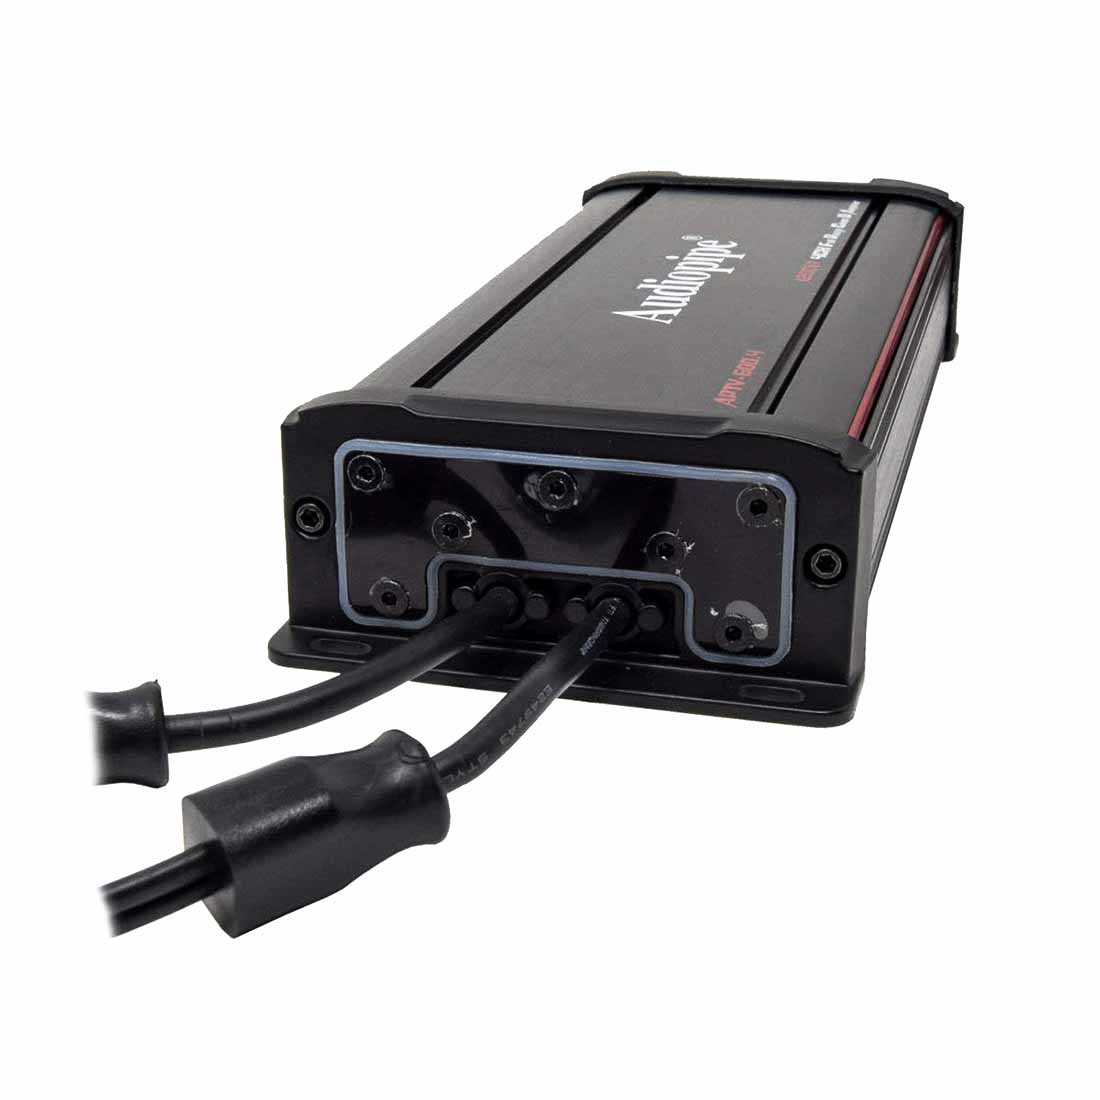 Audiopipe APTV-600.4 1200W 4-Channel Class D Marine Powersports Micro Amplifier